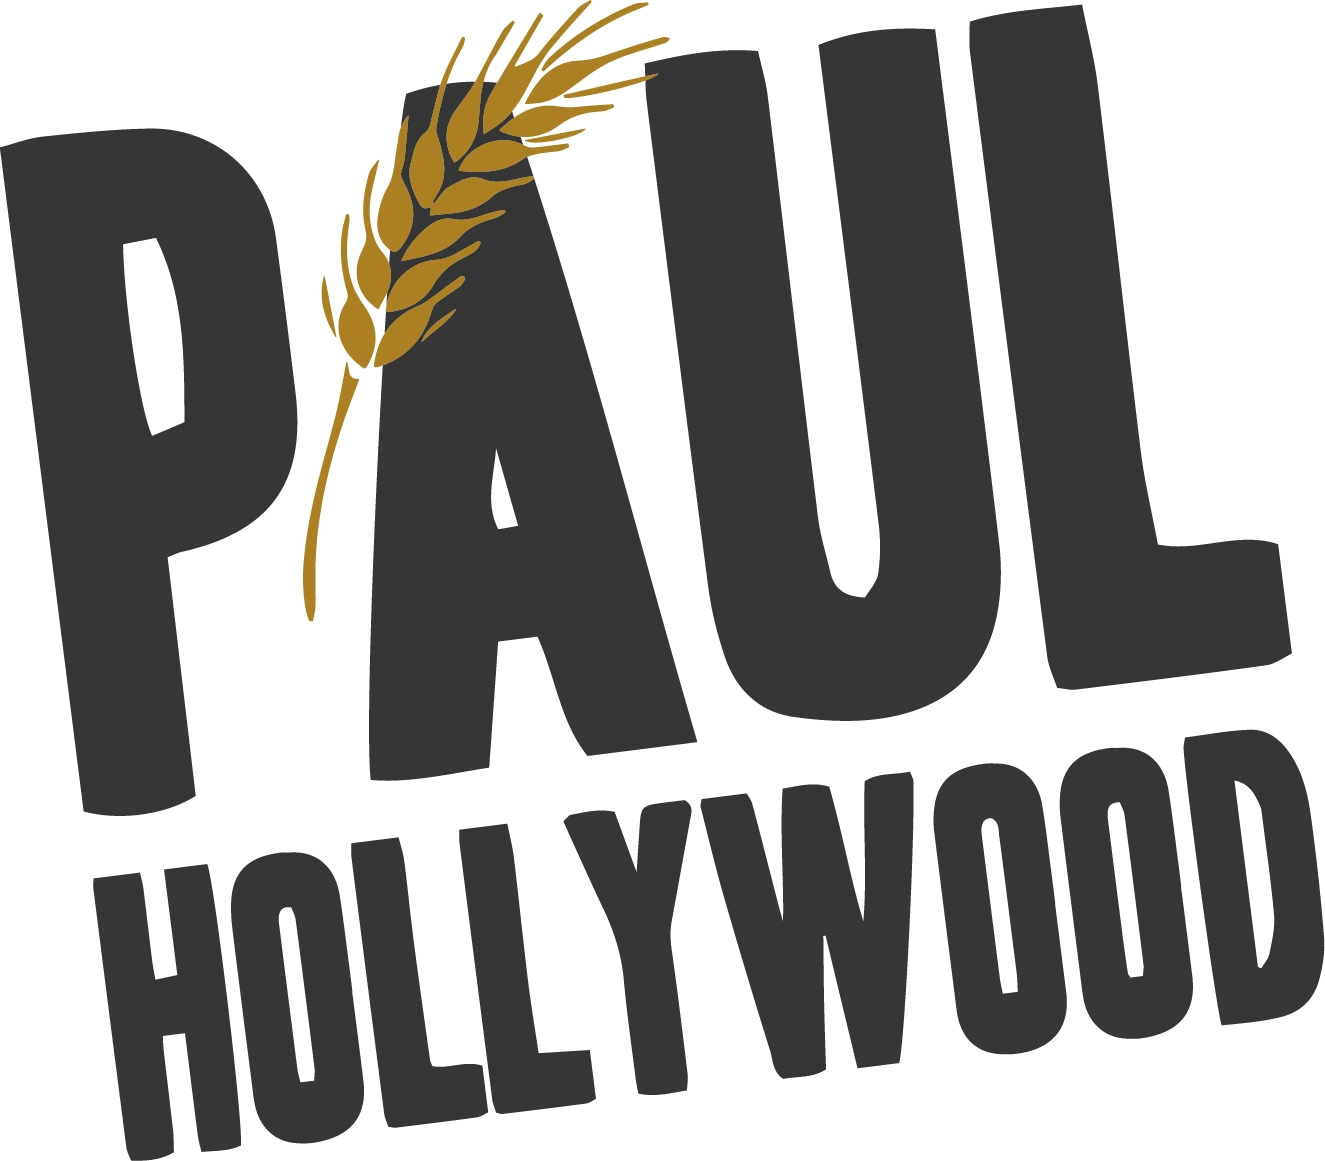 Paul Hollywood logo